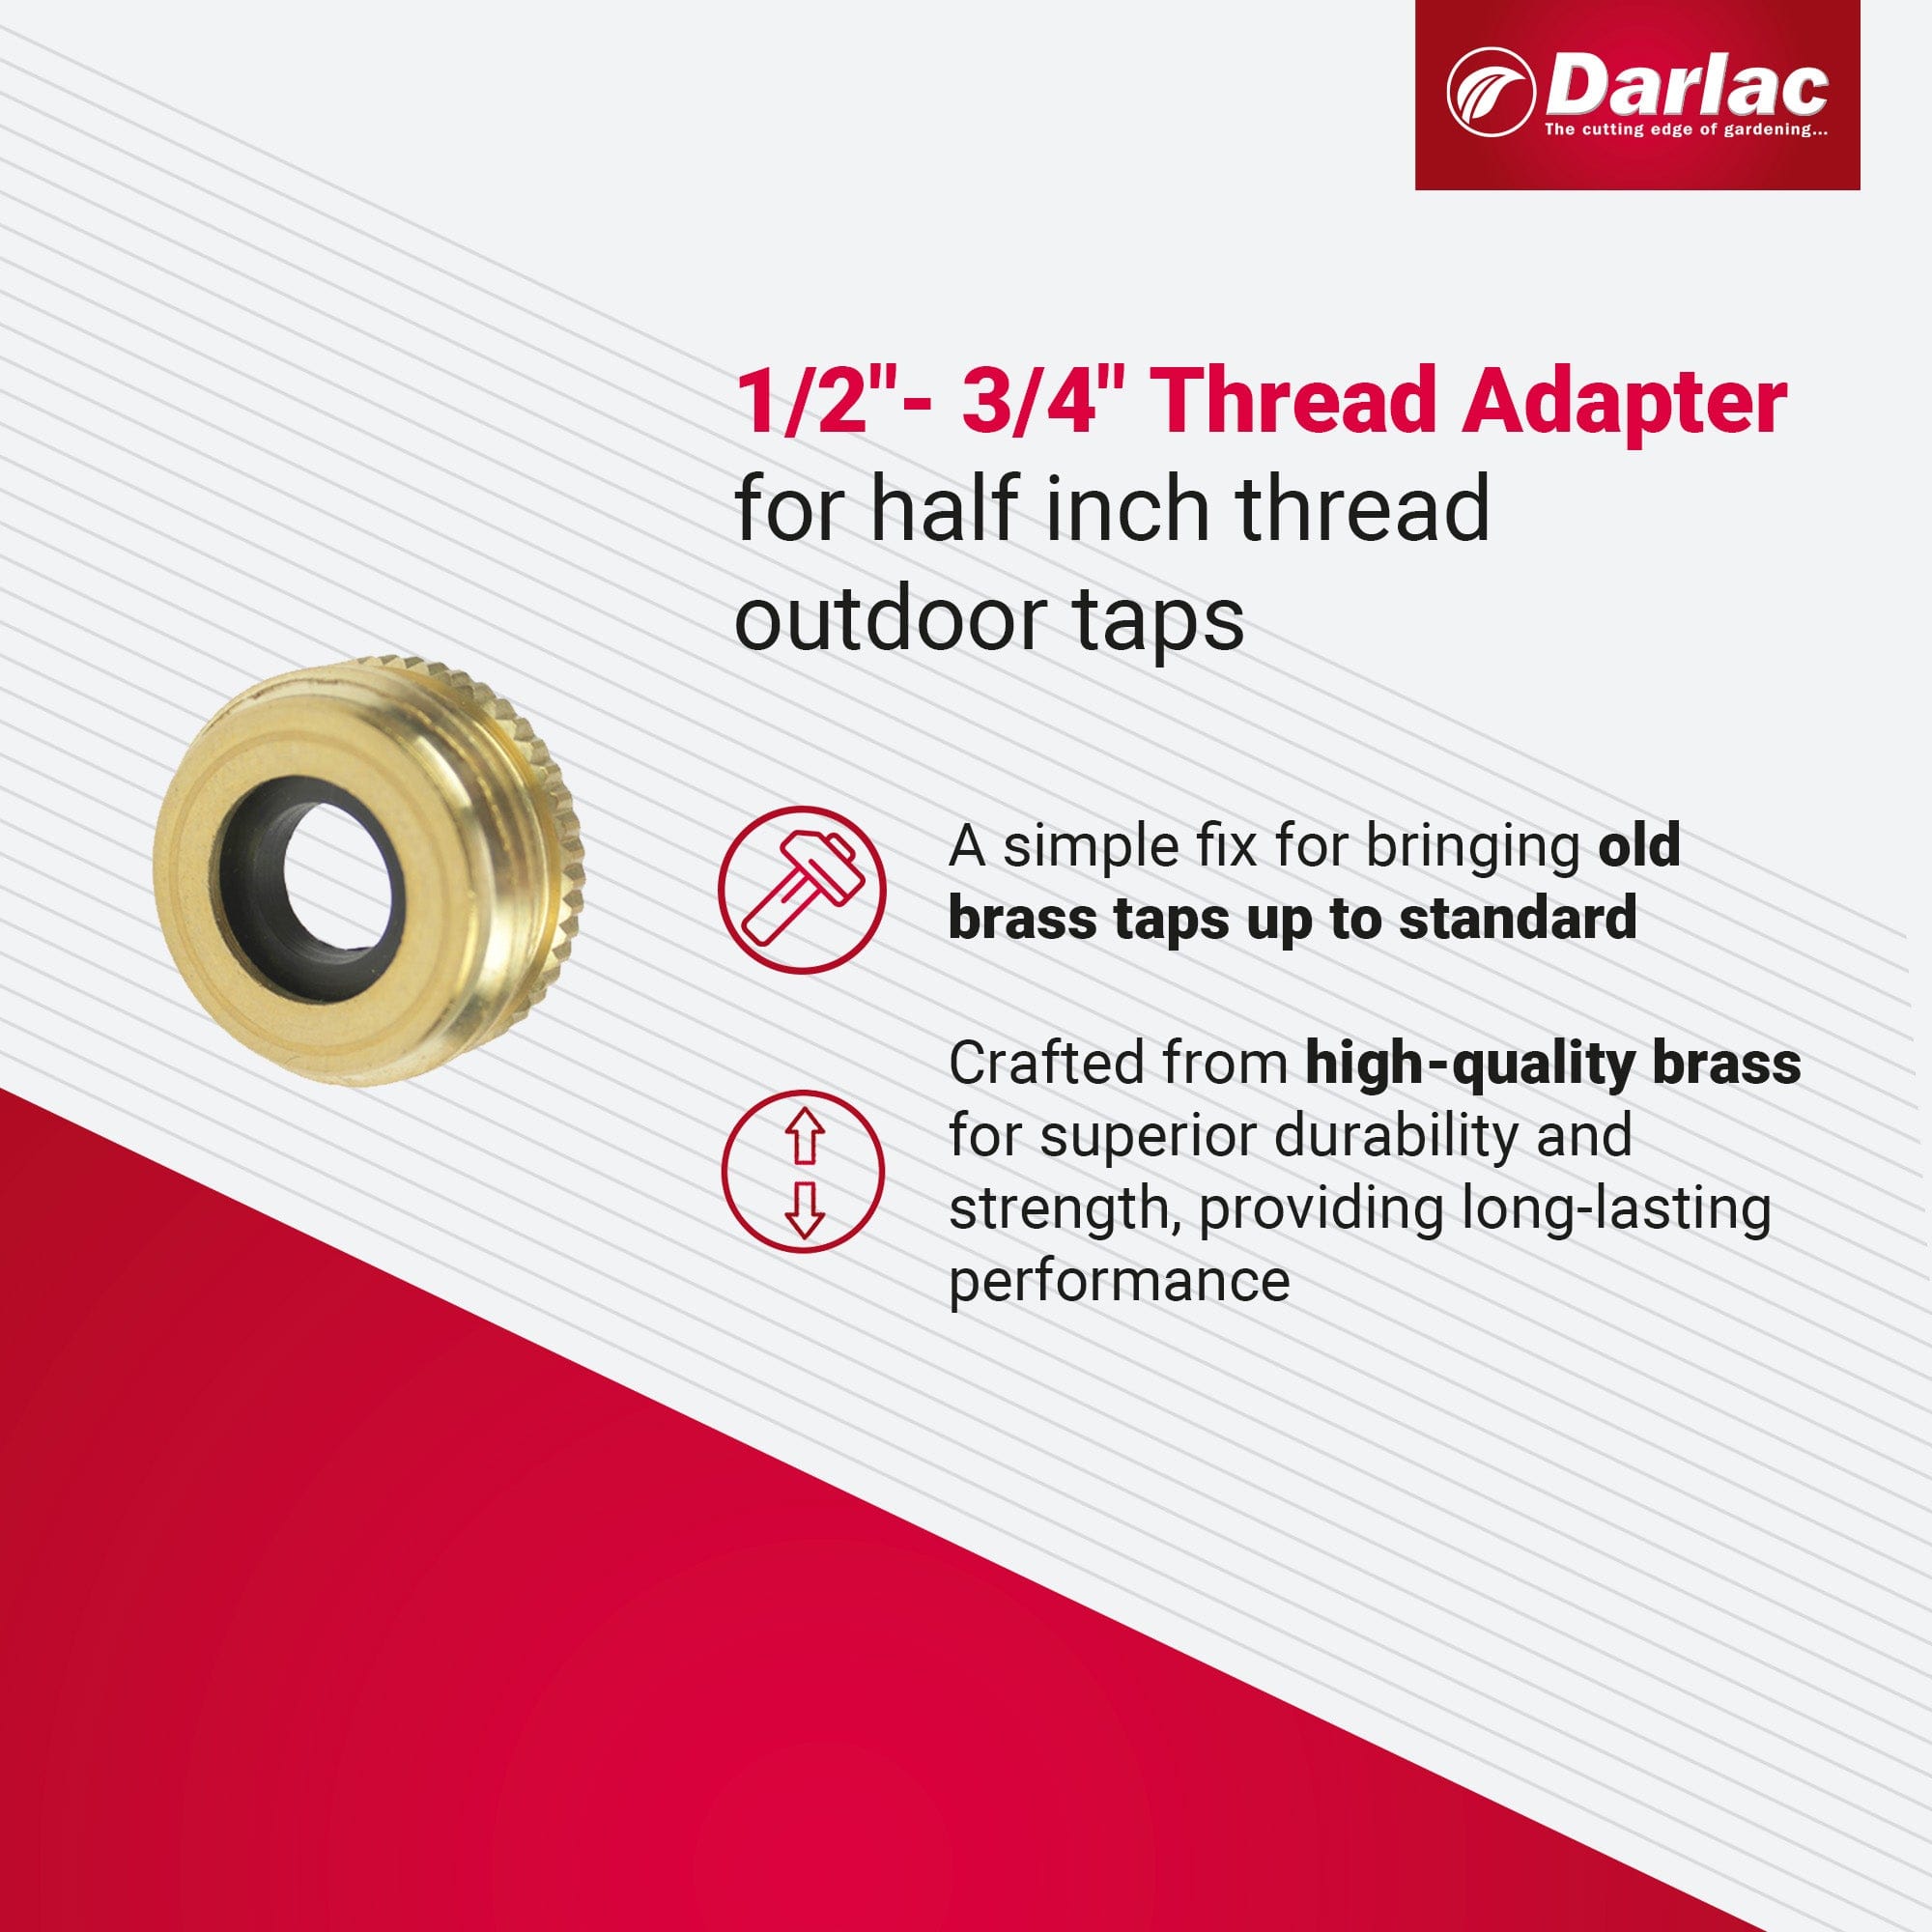 Darlac 1/2" - 3/4" Thread Adapter